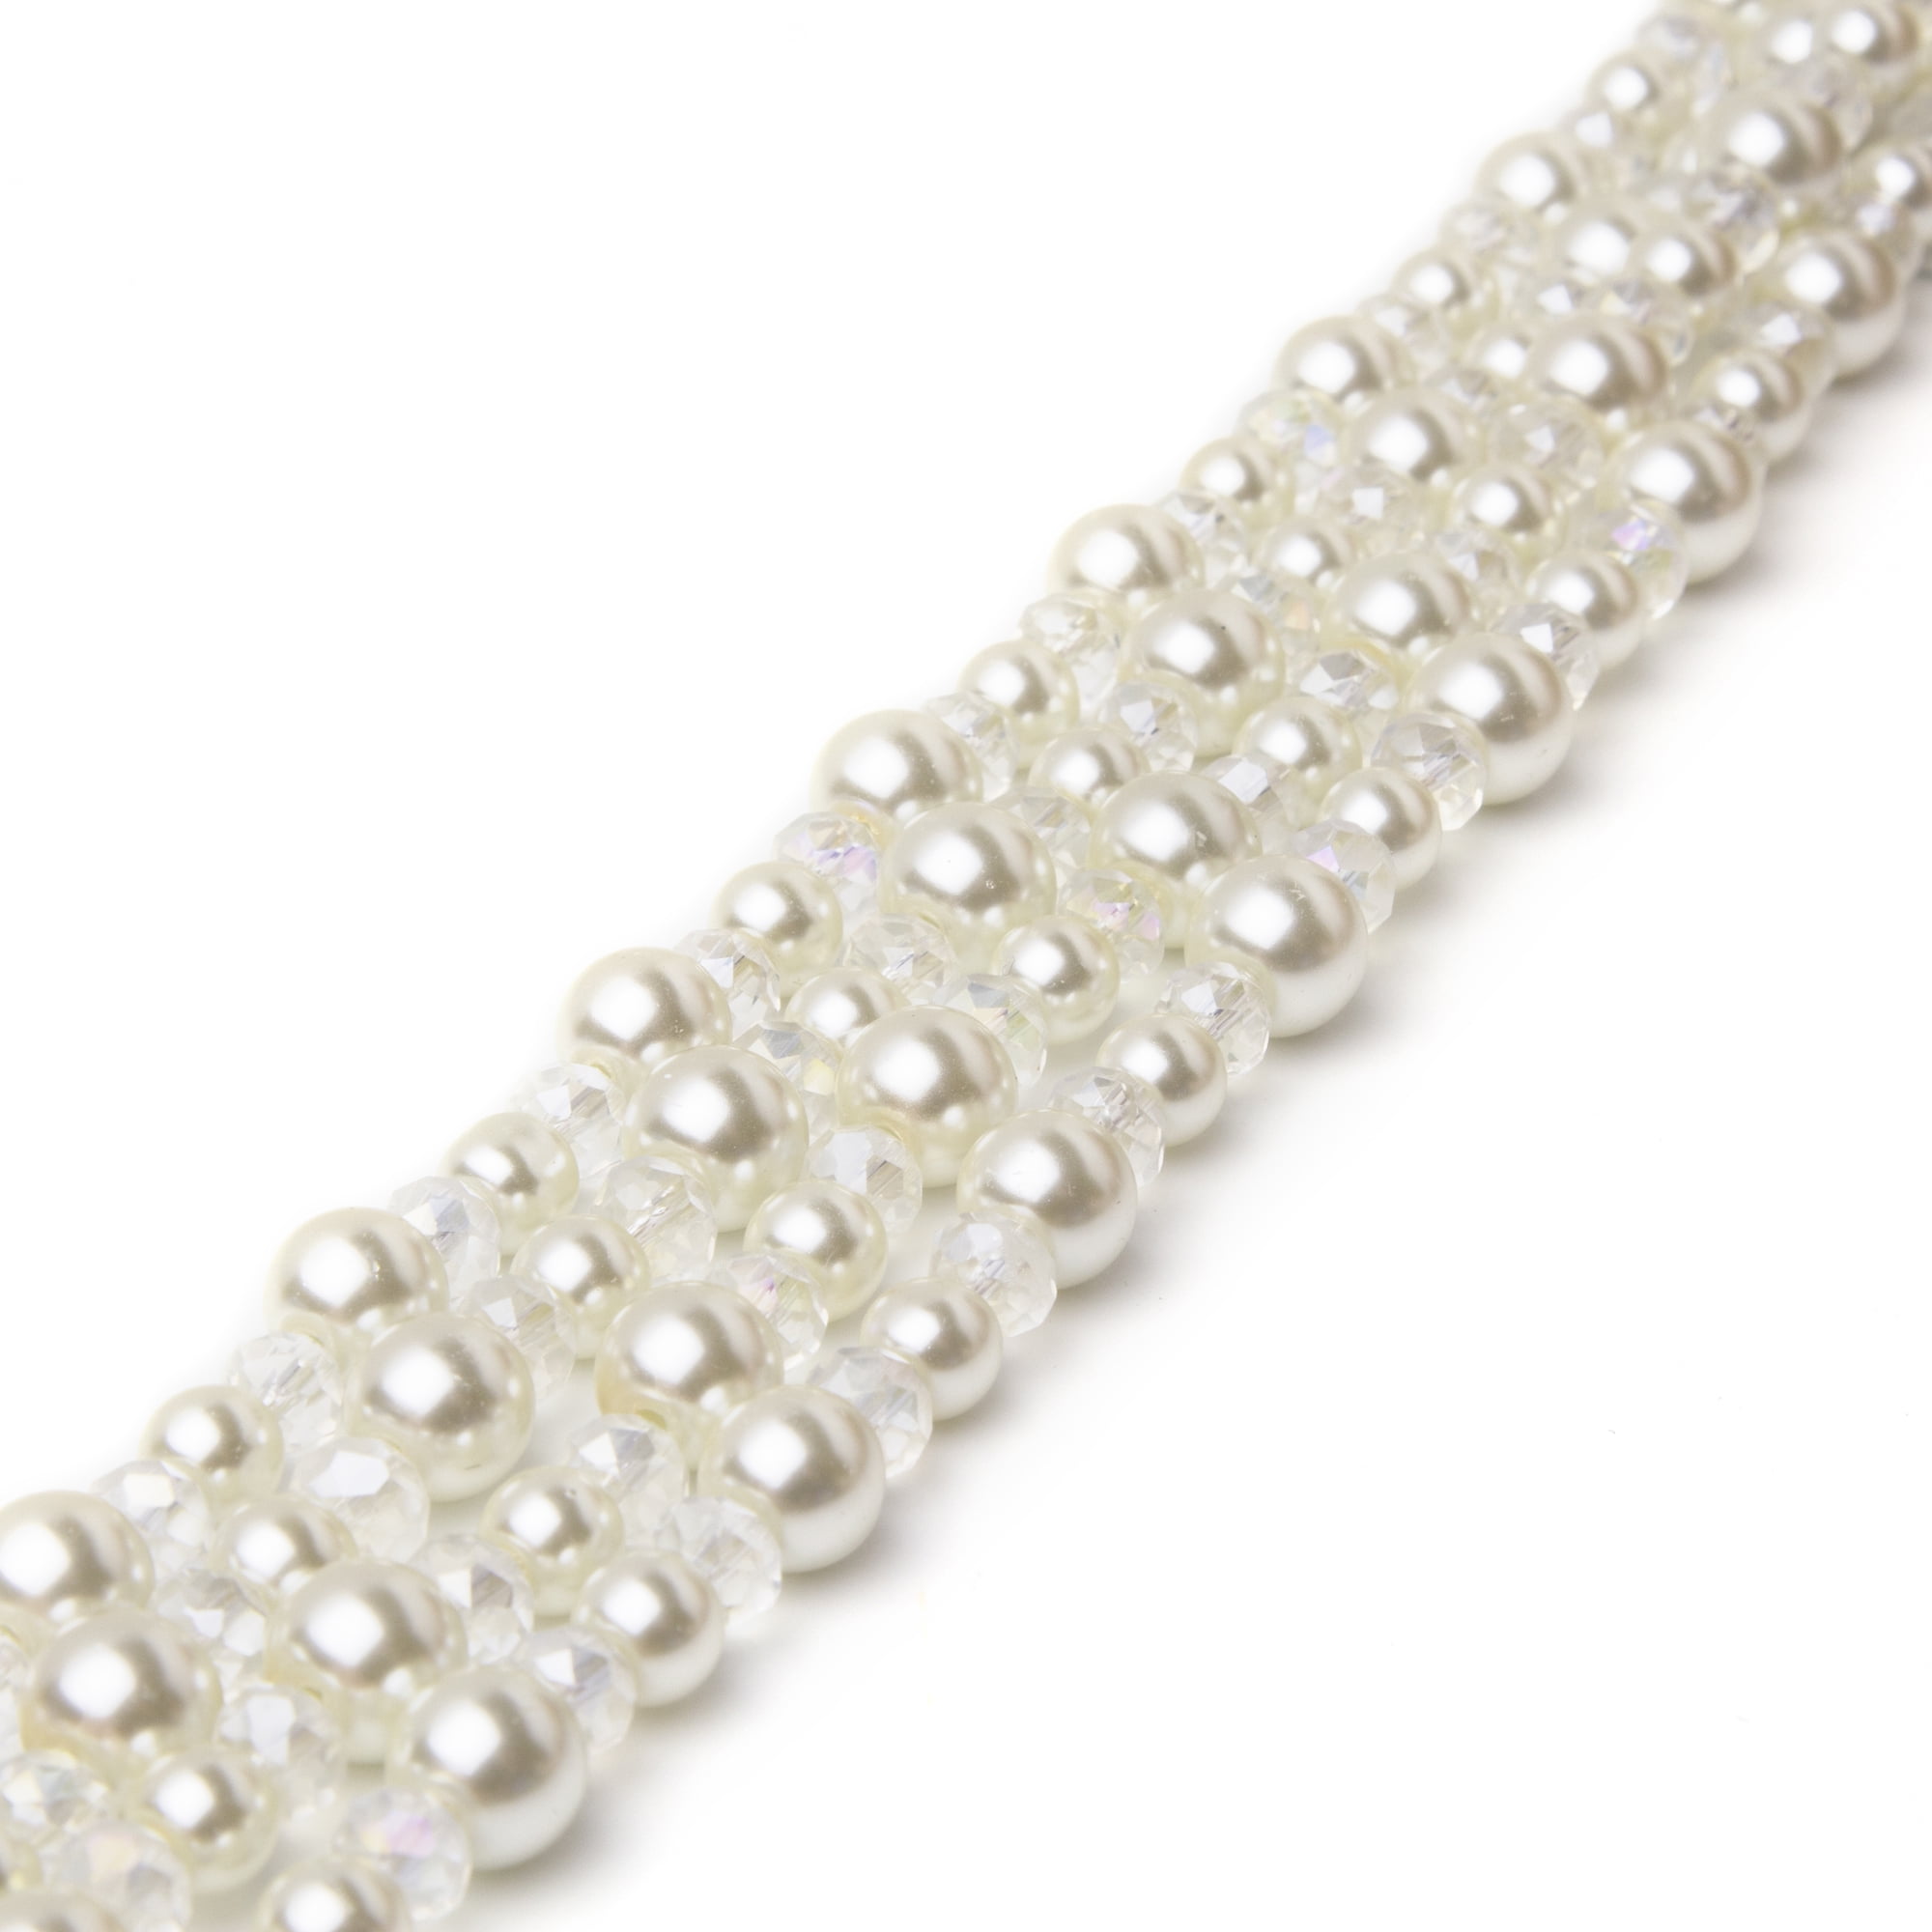 100 PCS Wedding Cards Embellishments Lovely Flat Back Pearl Flower Beads 11mm